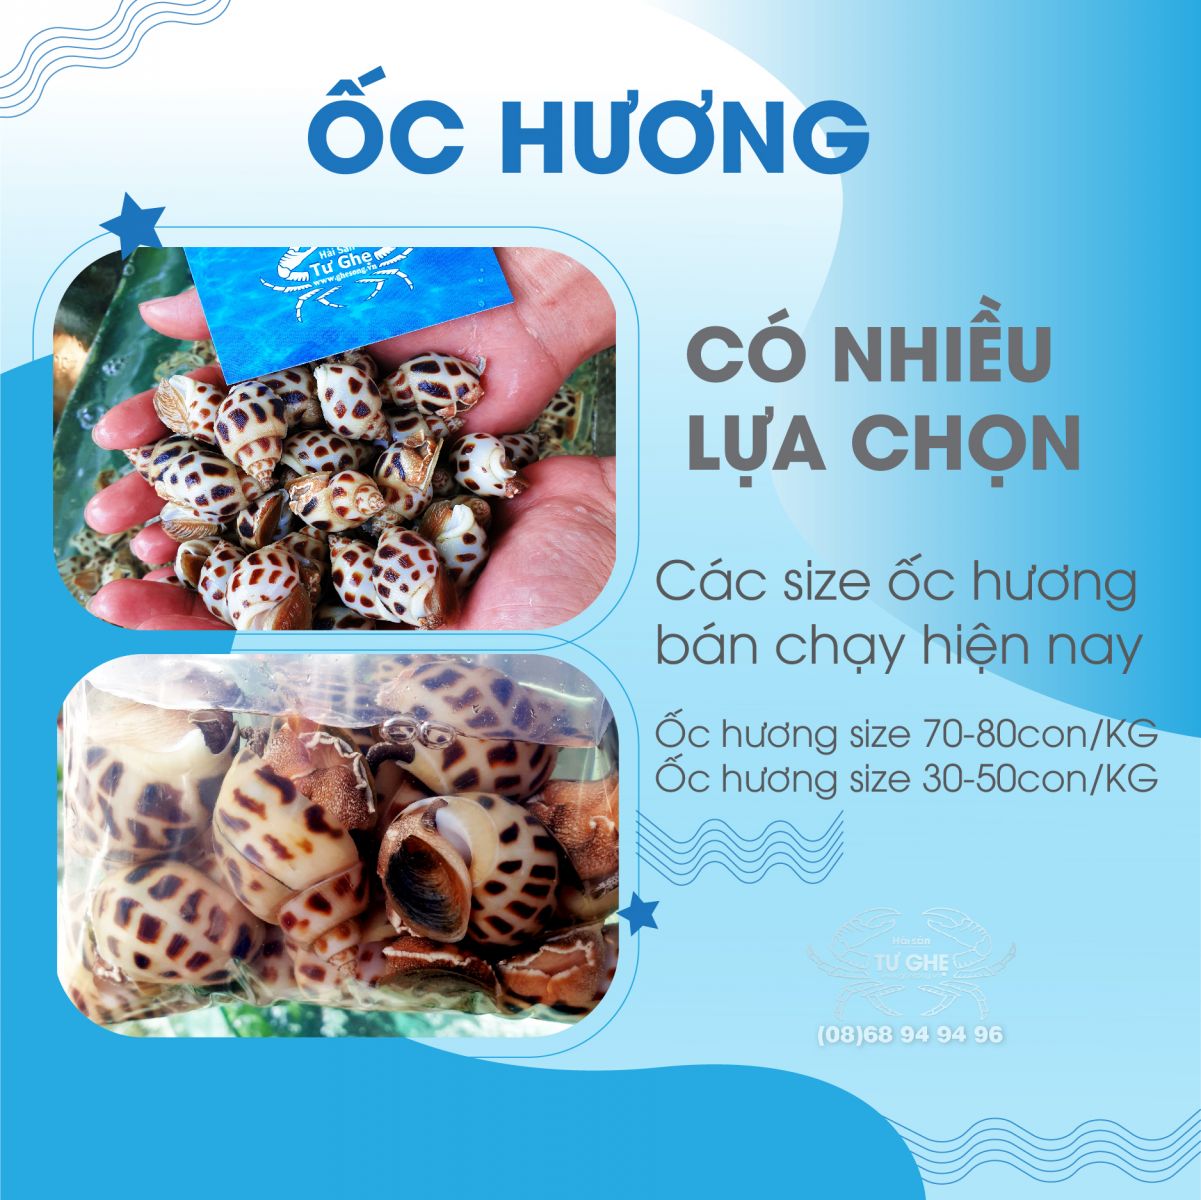 oc-huong-song-co-2-size-chon-ua-chuong